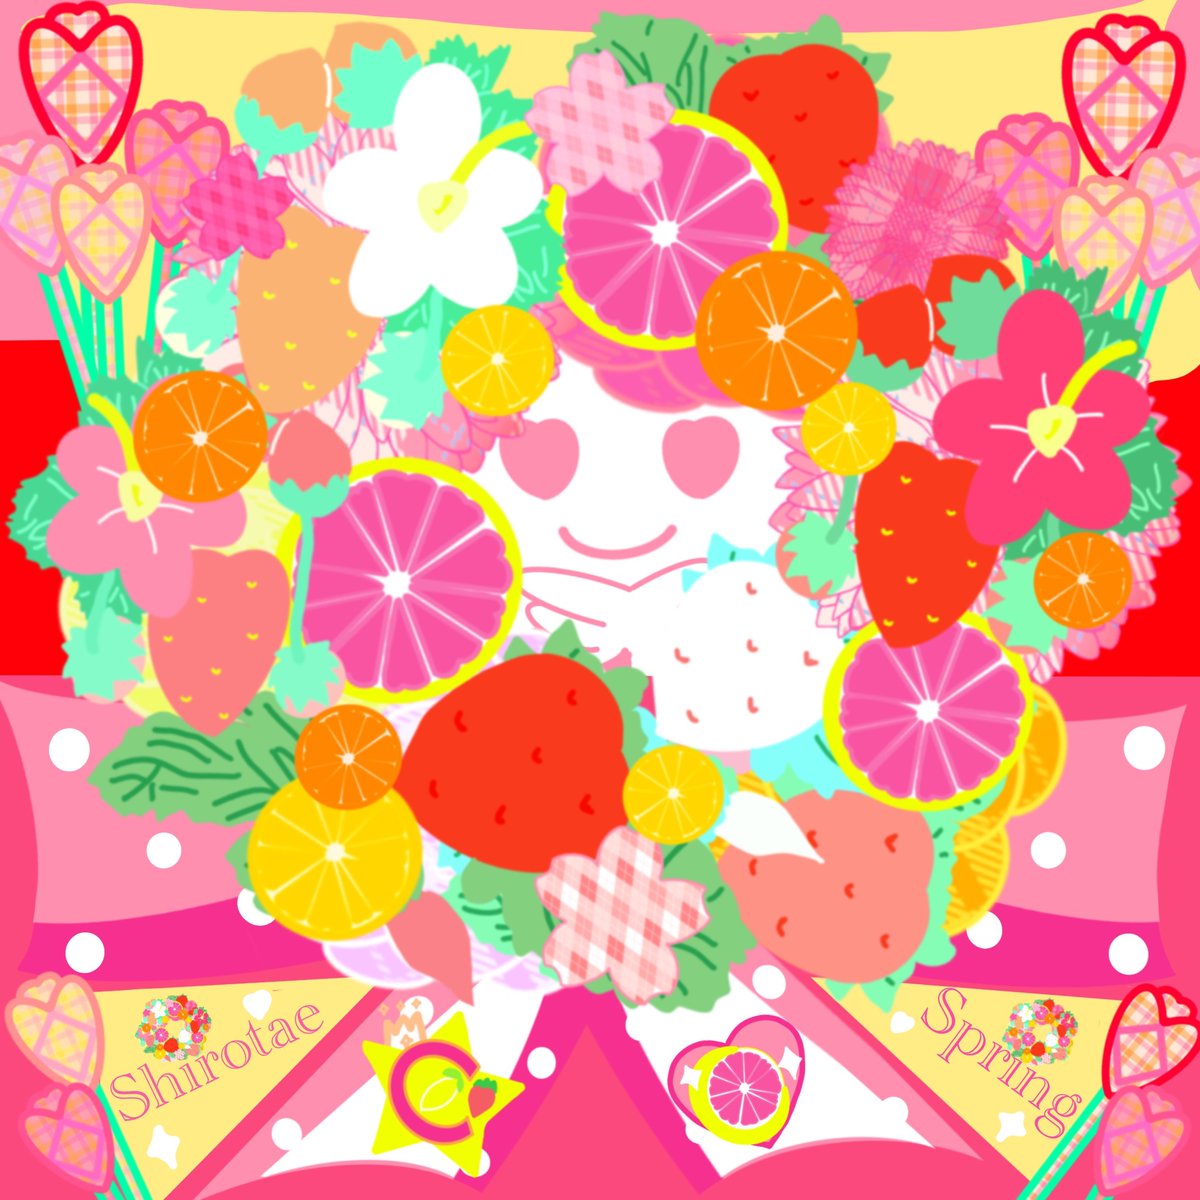 Day85♡
Shirotae Spring lease💐🌸🍓🍊
春の旬をリースに飾りつけ💖永遠のシンボル∞✨365日×♾️春の旬を感じて満開の花を見て幸せに過ごしましょん♬✨
#shirotae365ART🤍👩‍🎨🎨
#SHIROTAE_SQUAREART⬜️🎁🎊
#popart  #art #artist #illustration
#イラスト　#デザイン